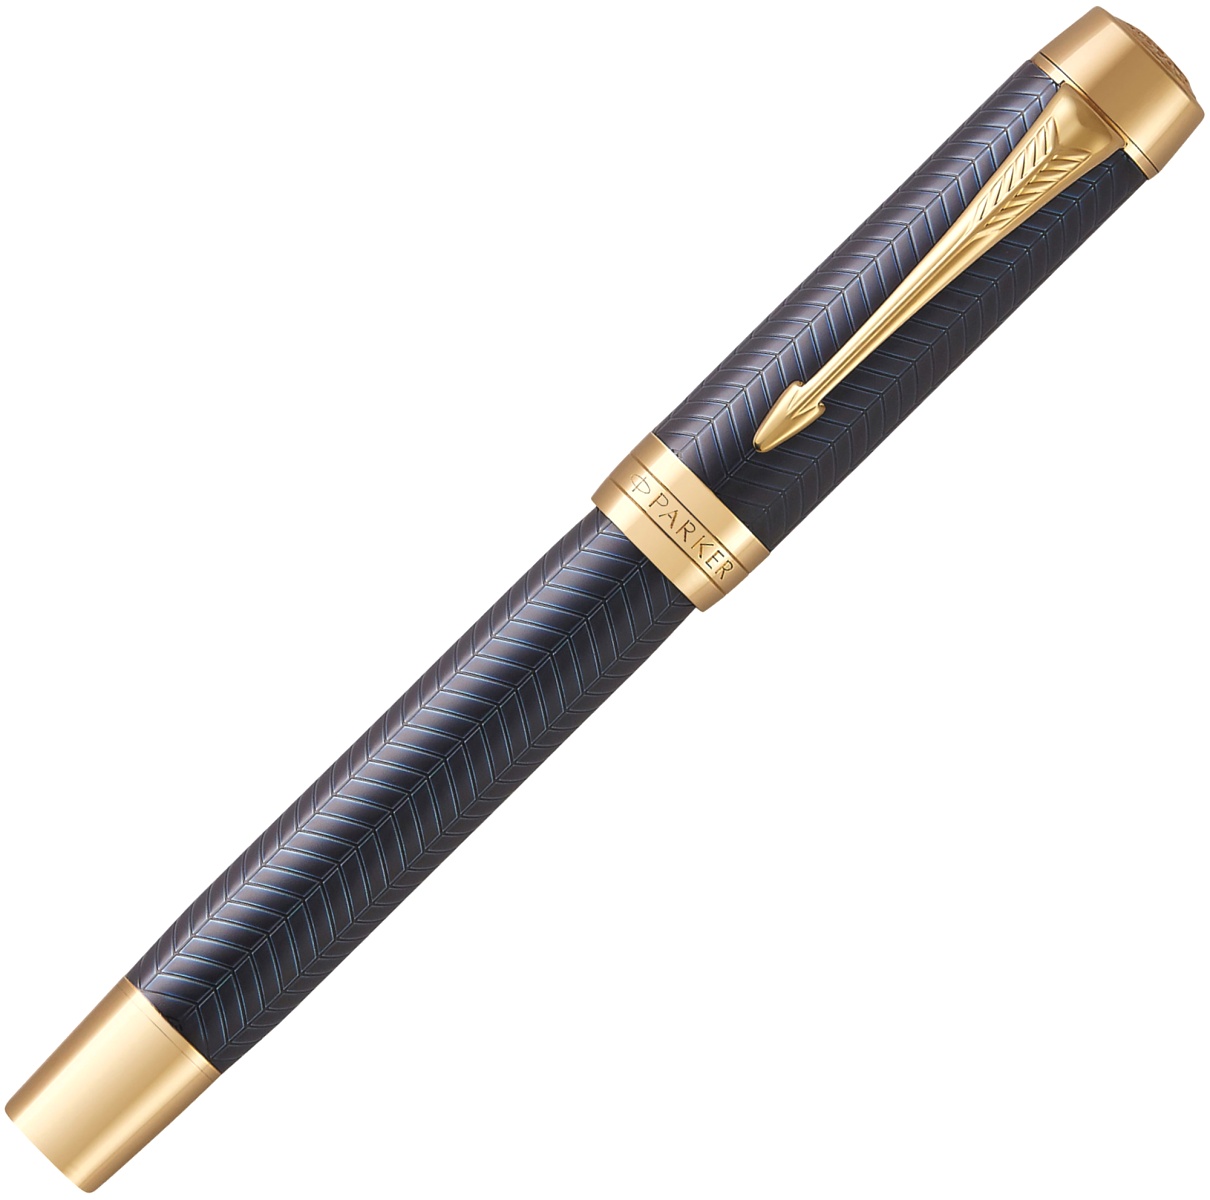  Перьевая ручка Parker Duofold Prestige Centennial F307, Blue Chevron GT (Перо M), фото 2